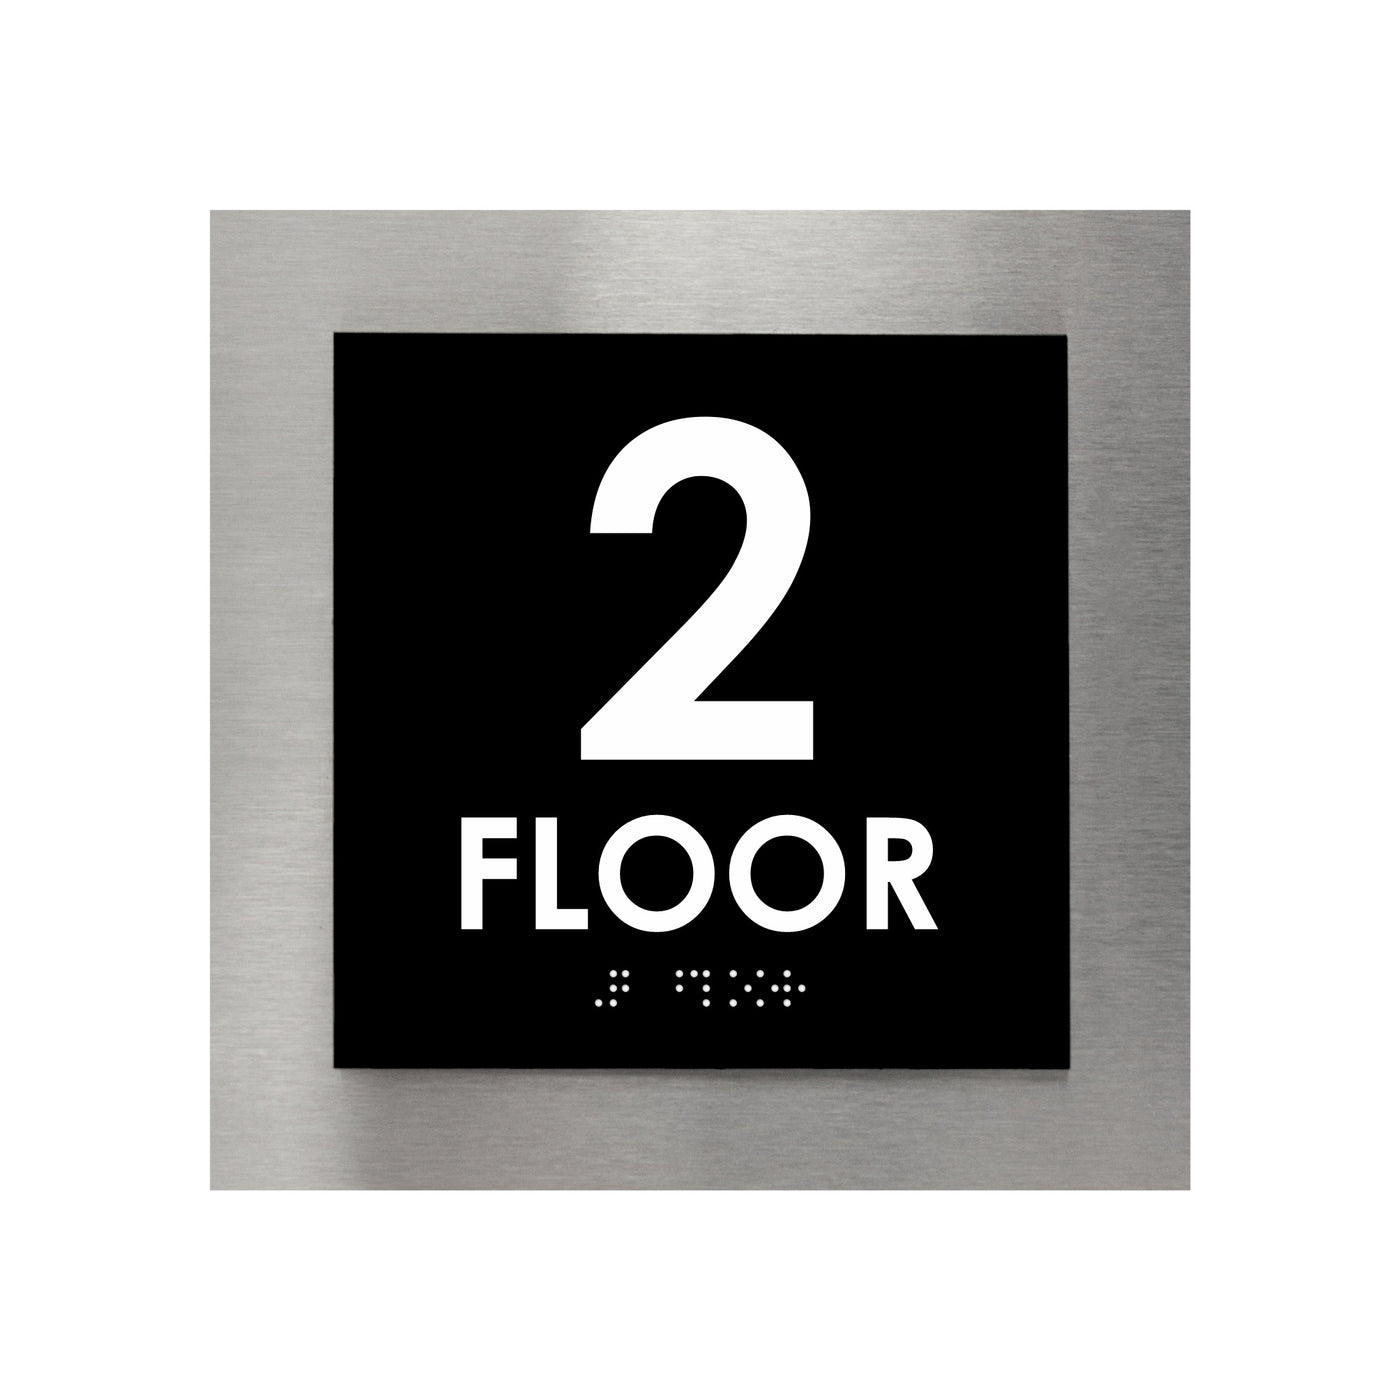 Floor Signs - Sign For 2nd Floor - Interior Stainless Steel Sign - "Modern" Design